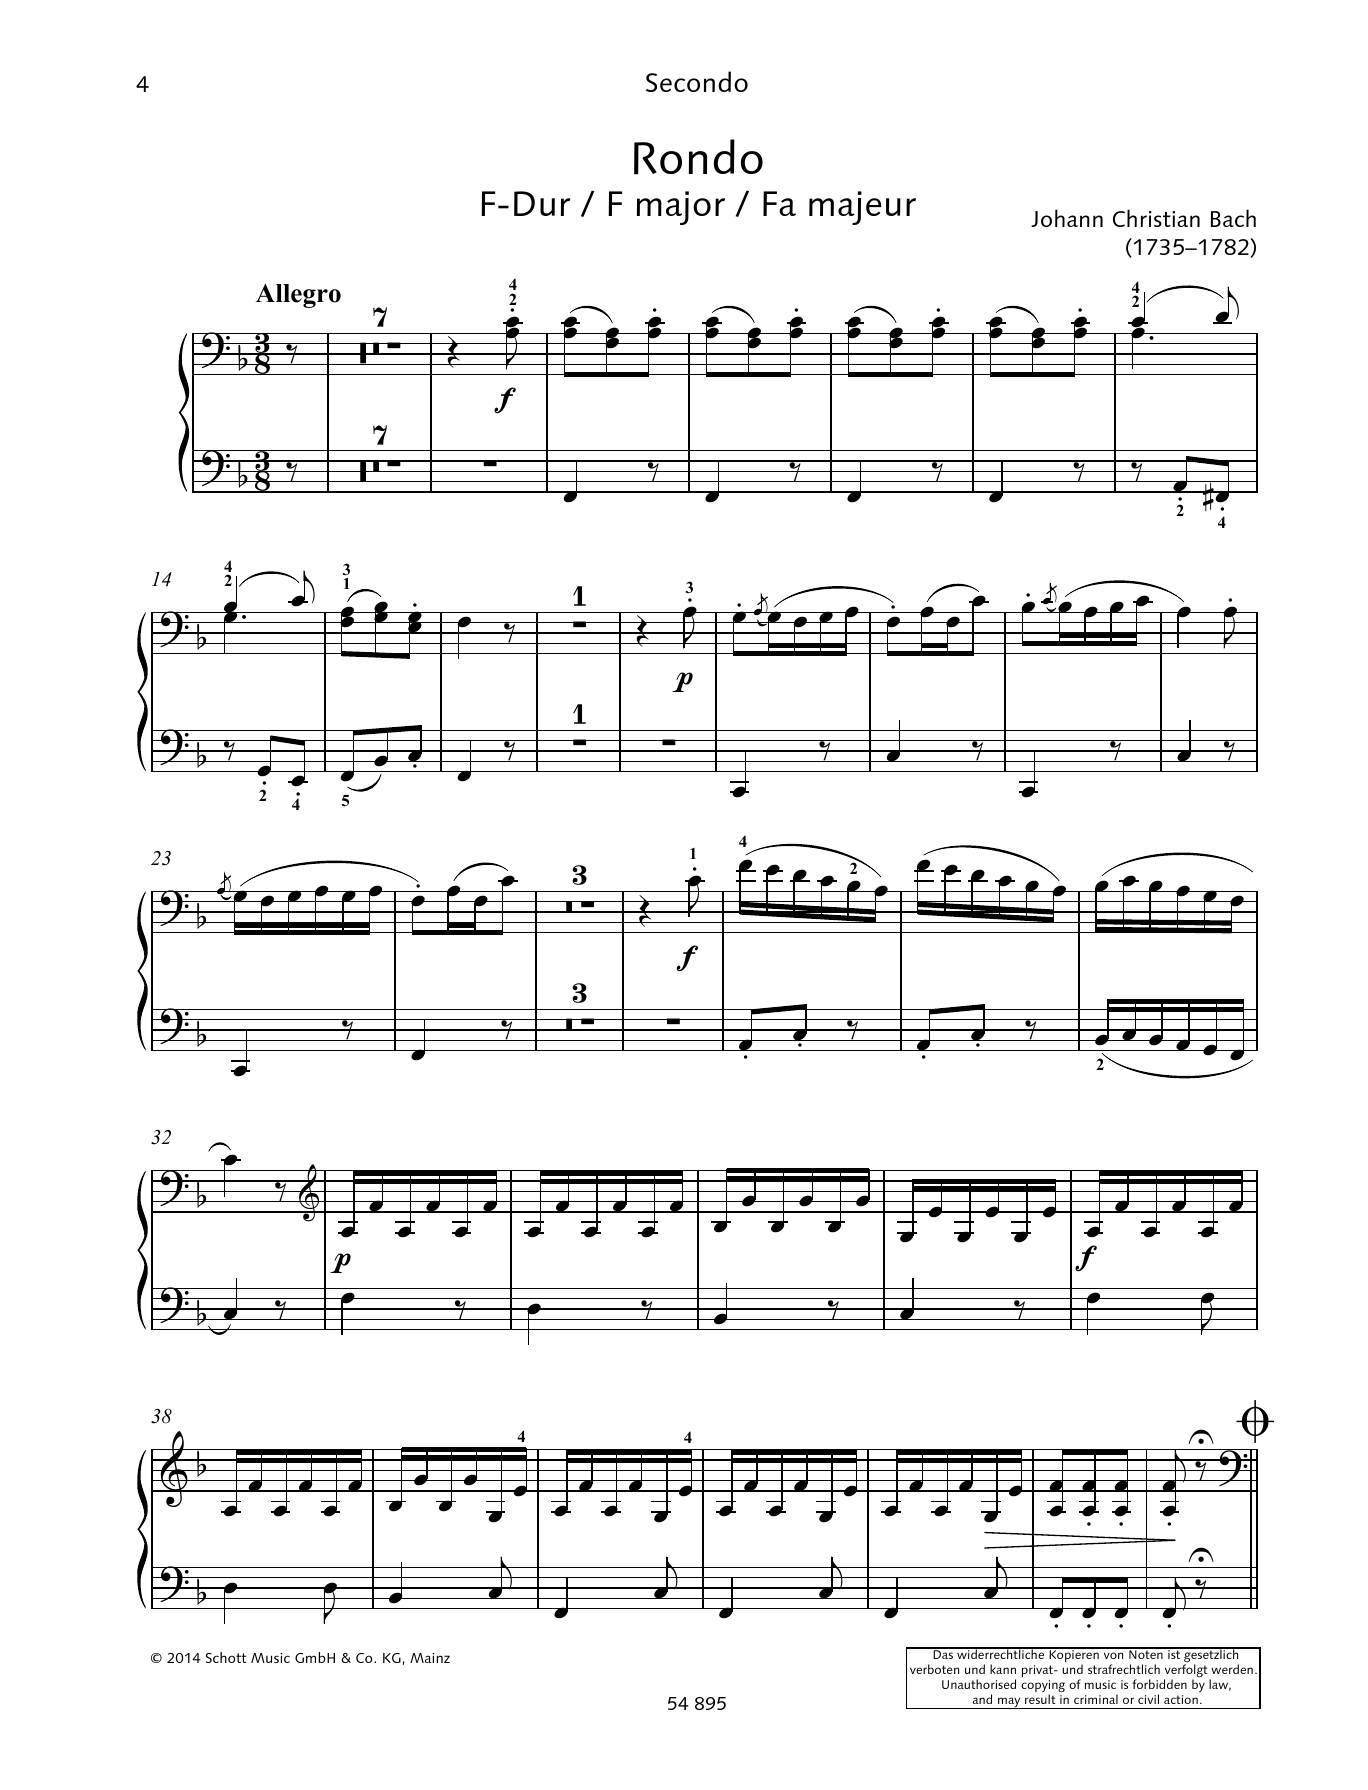 Download Johann Christian Bach Rondo Sheet Music